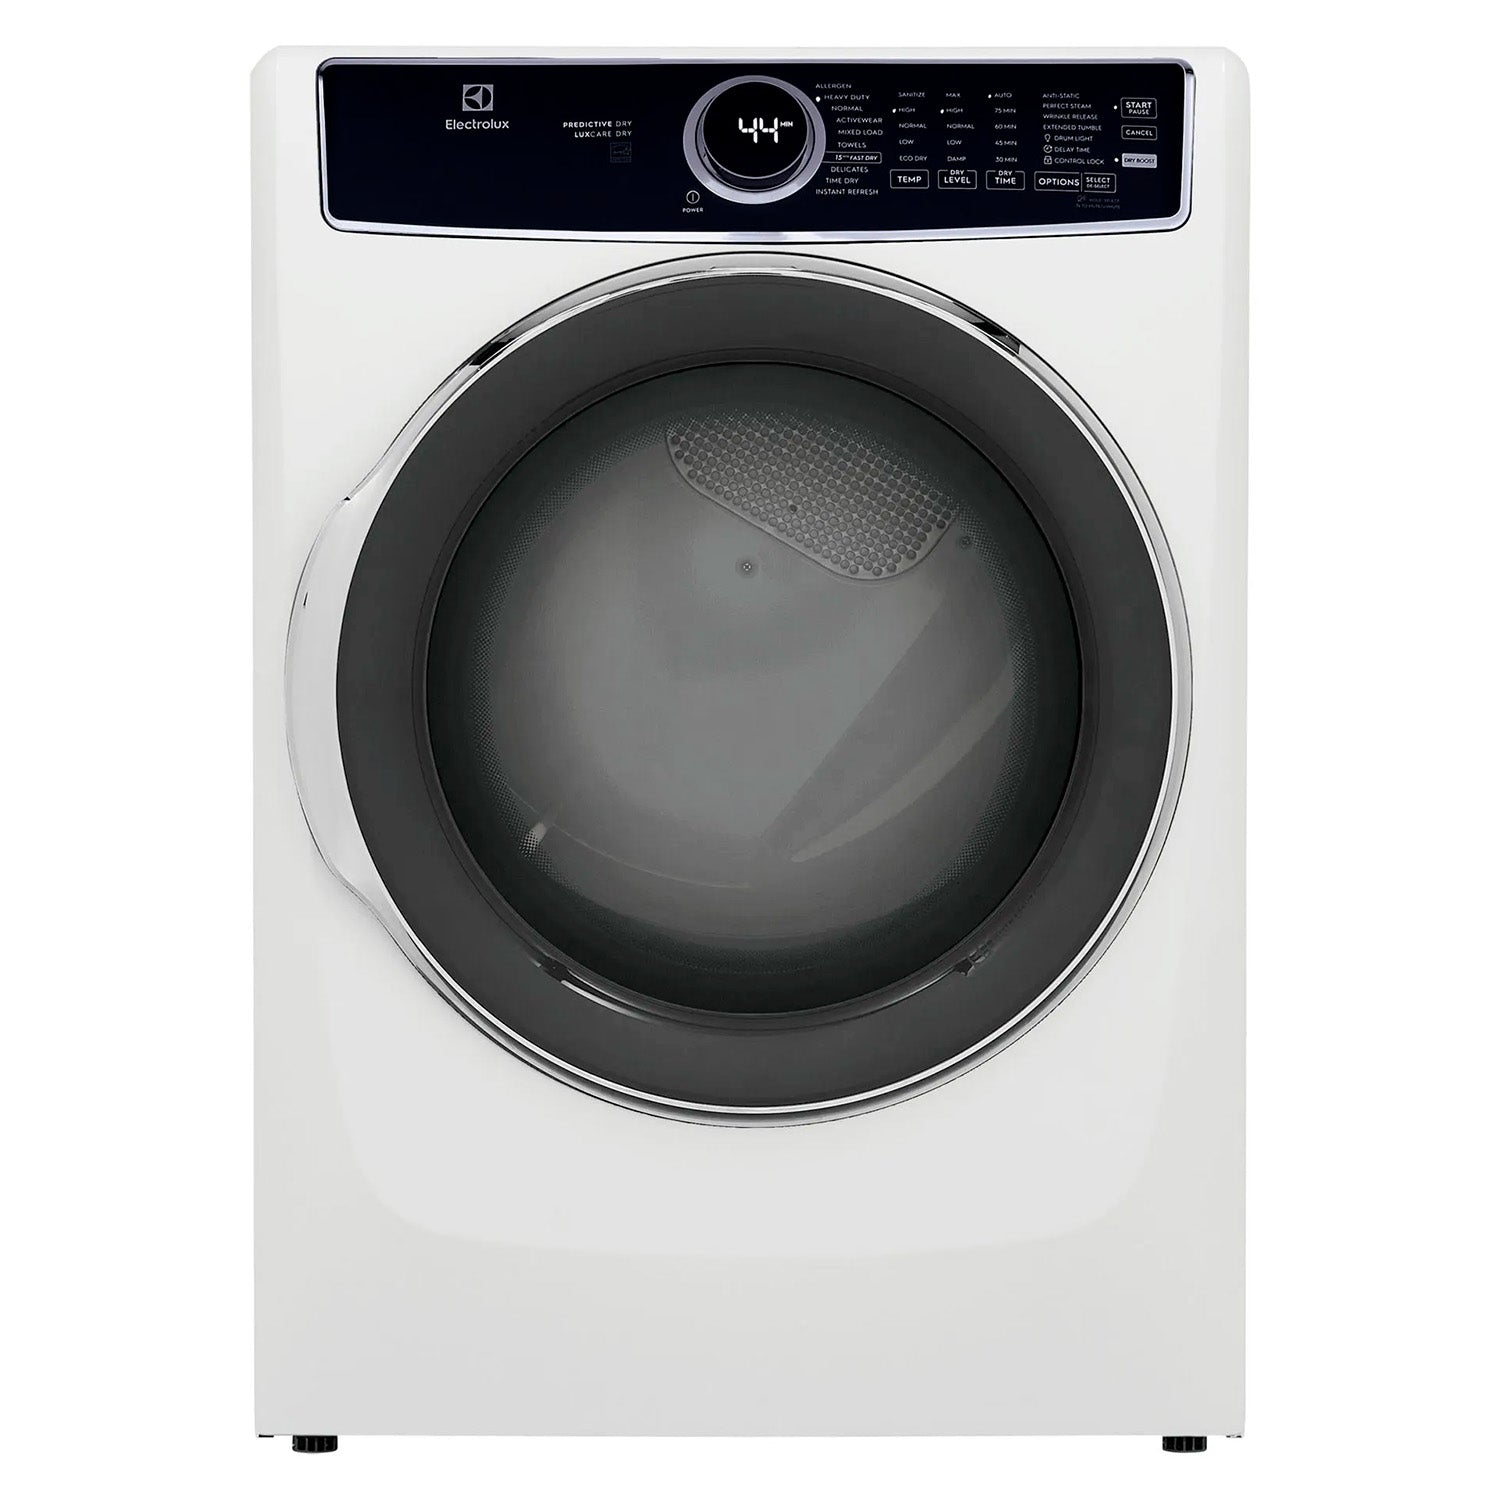 ELFE753CAW - DRYERS - Electrolux - Electric - White - New - Dryers - BonPrix Électroménagers